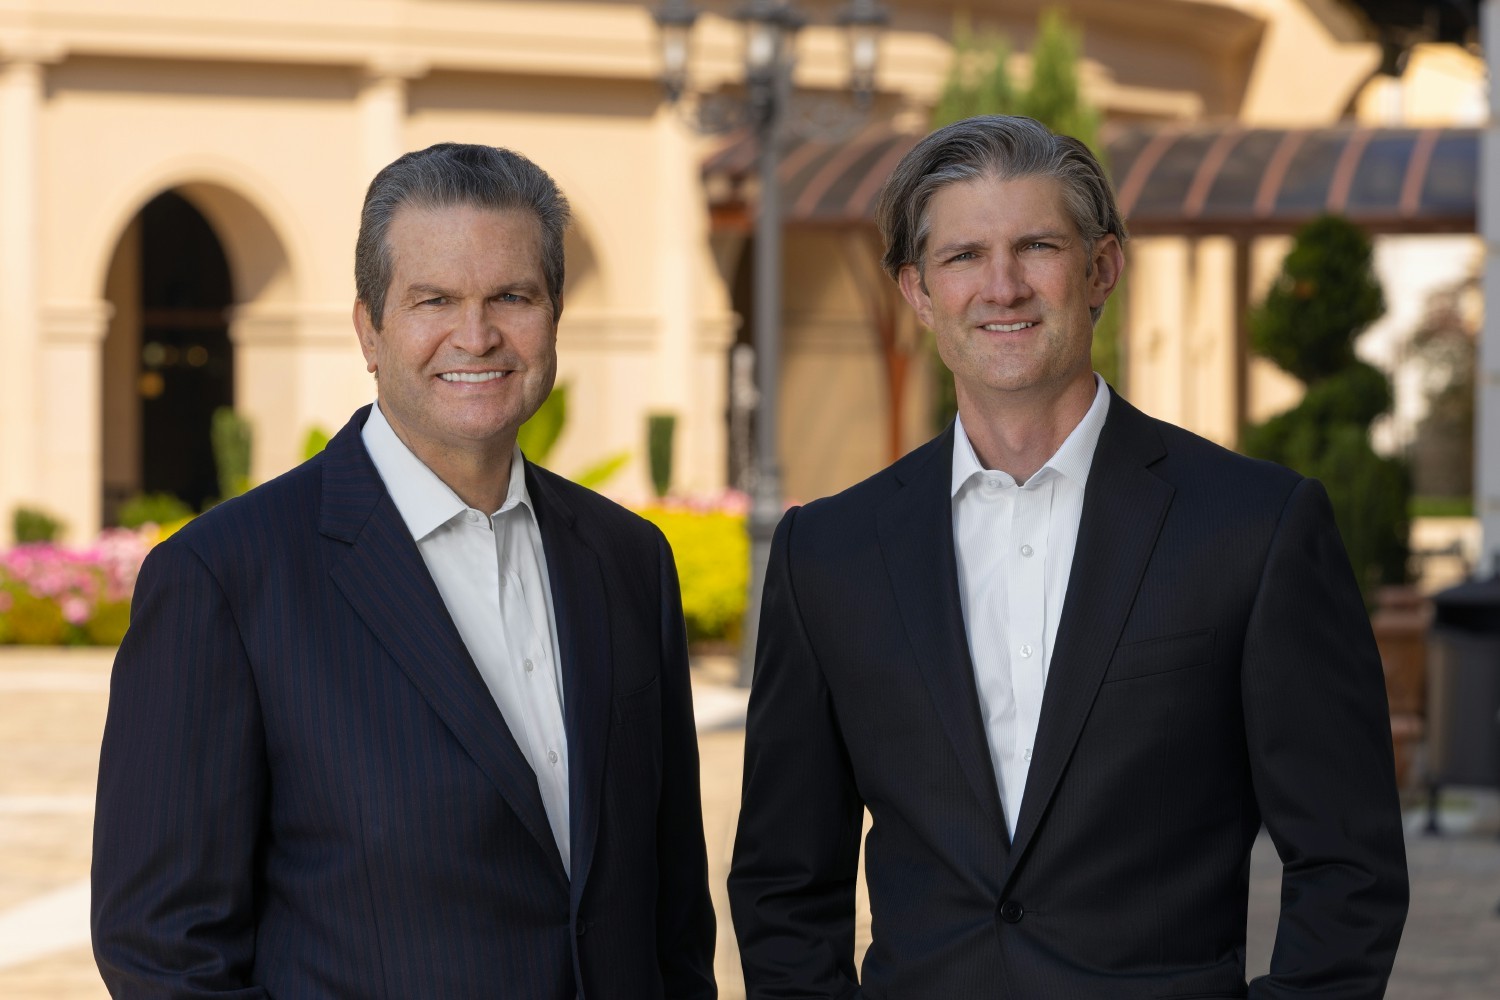 Rick Jackson (left) is founder, chairman and CEO of Jackson Healthcare. Shane Jackson serves as company president.